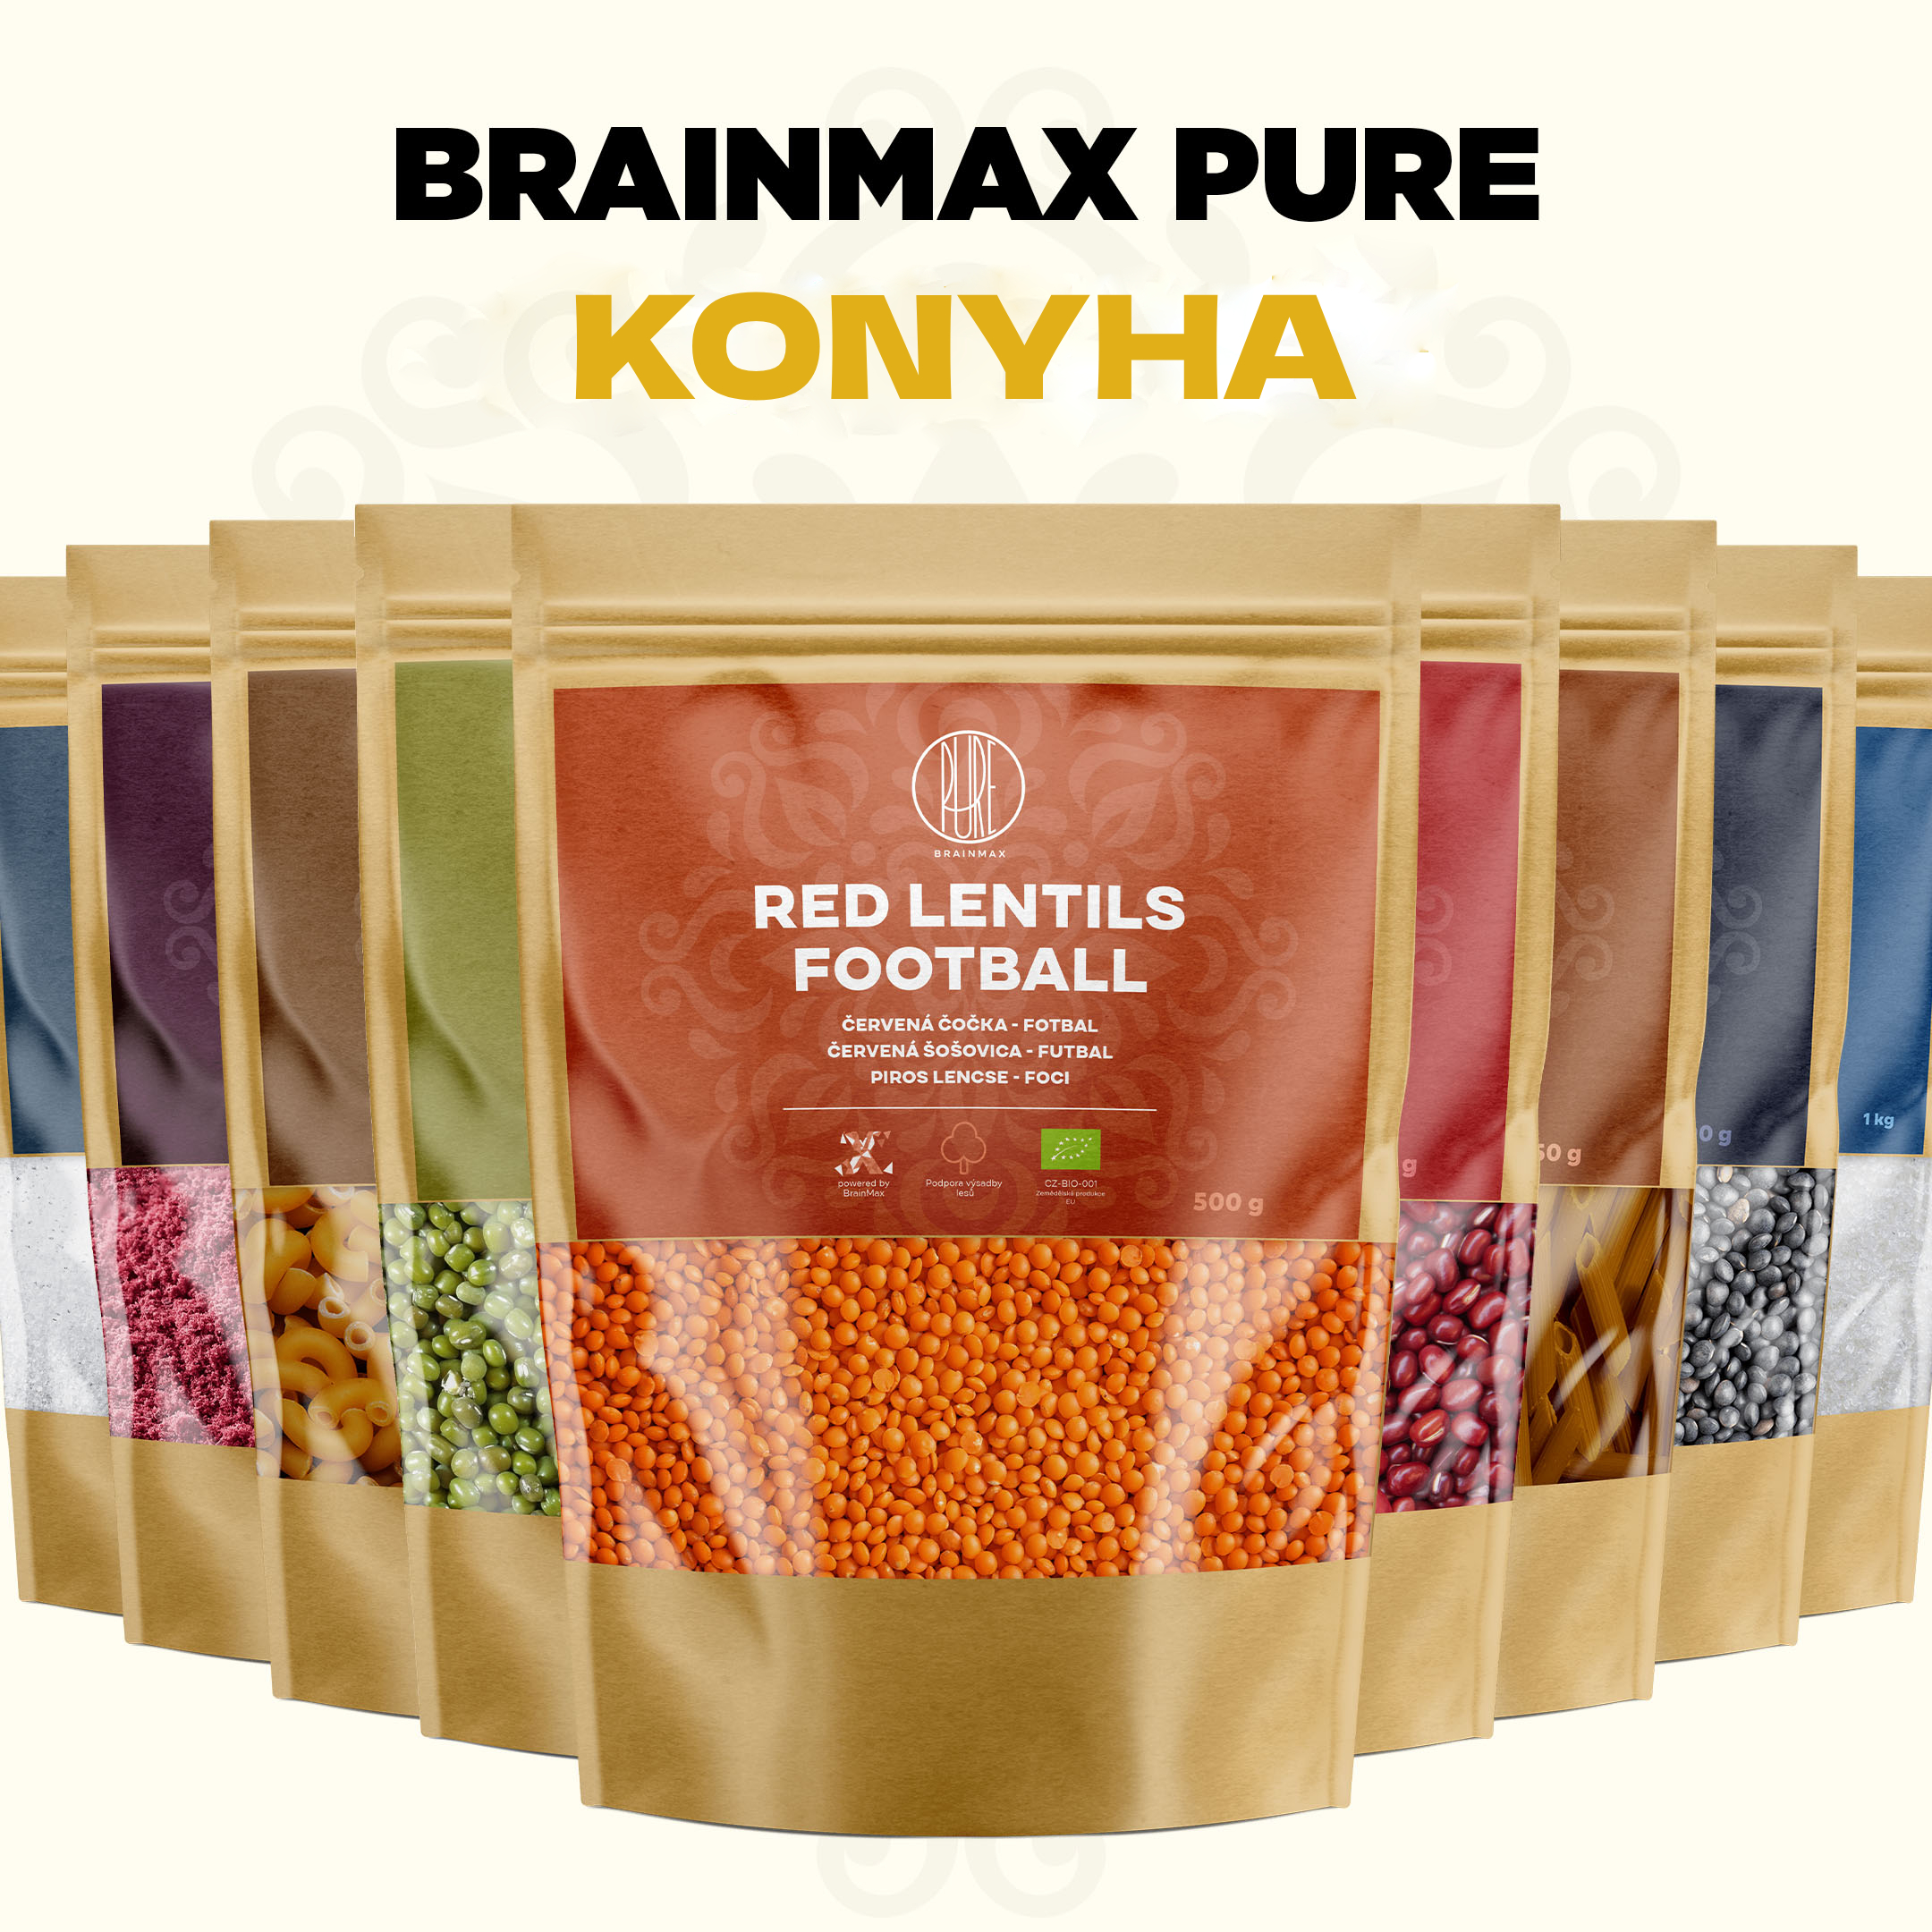 Brainmax Pure konyha termékei